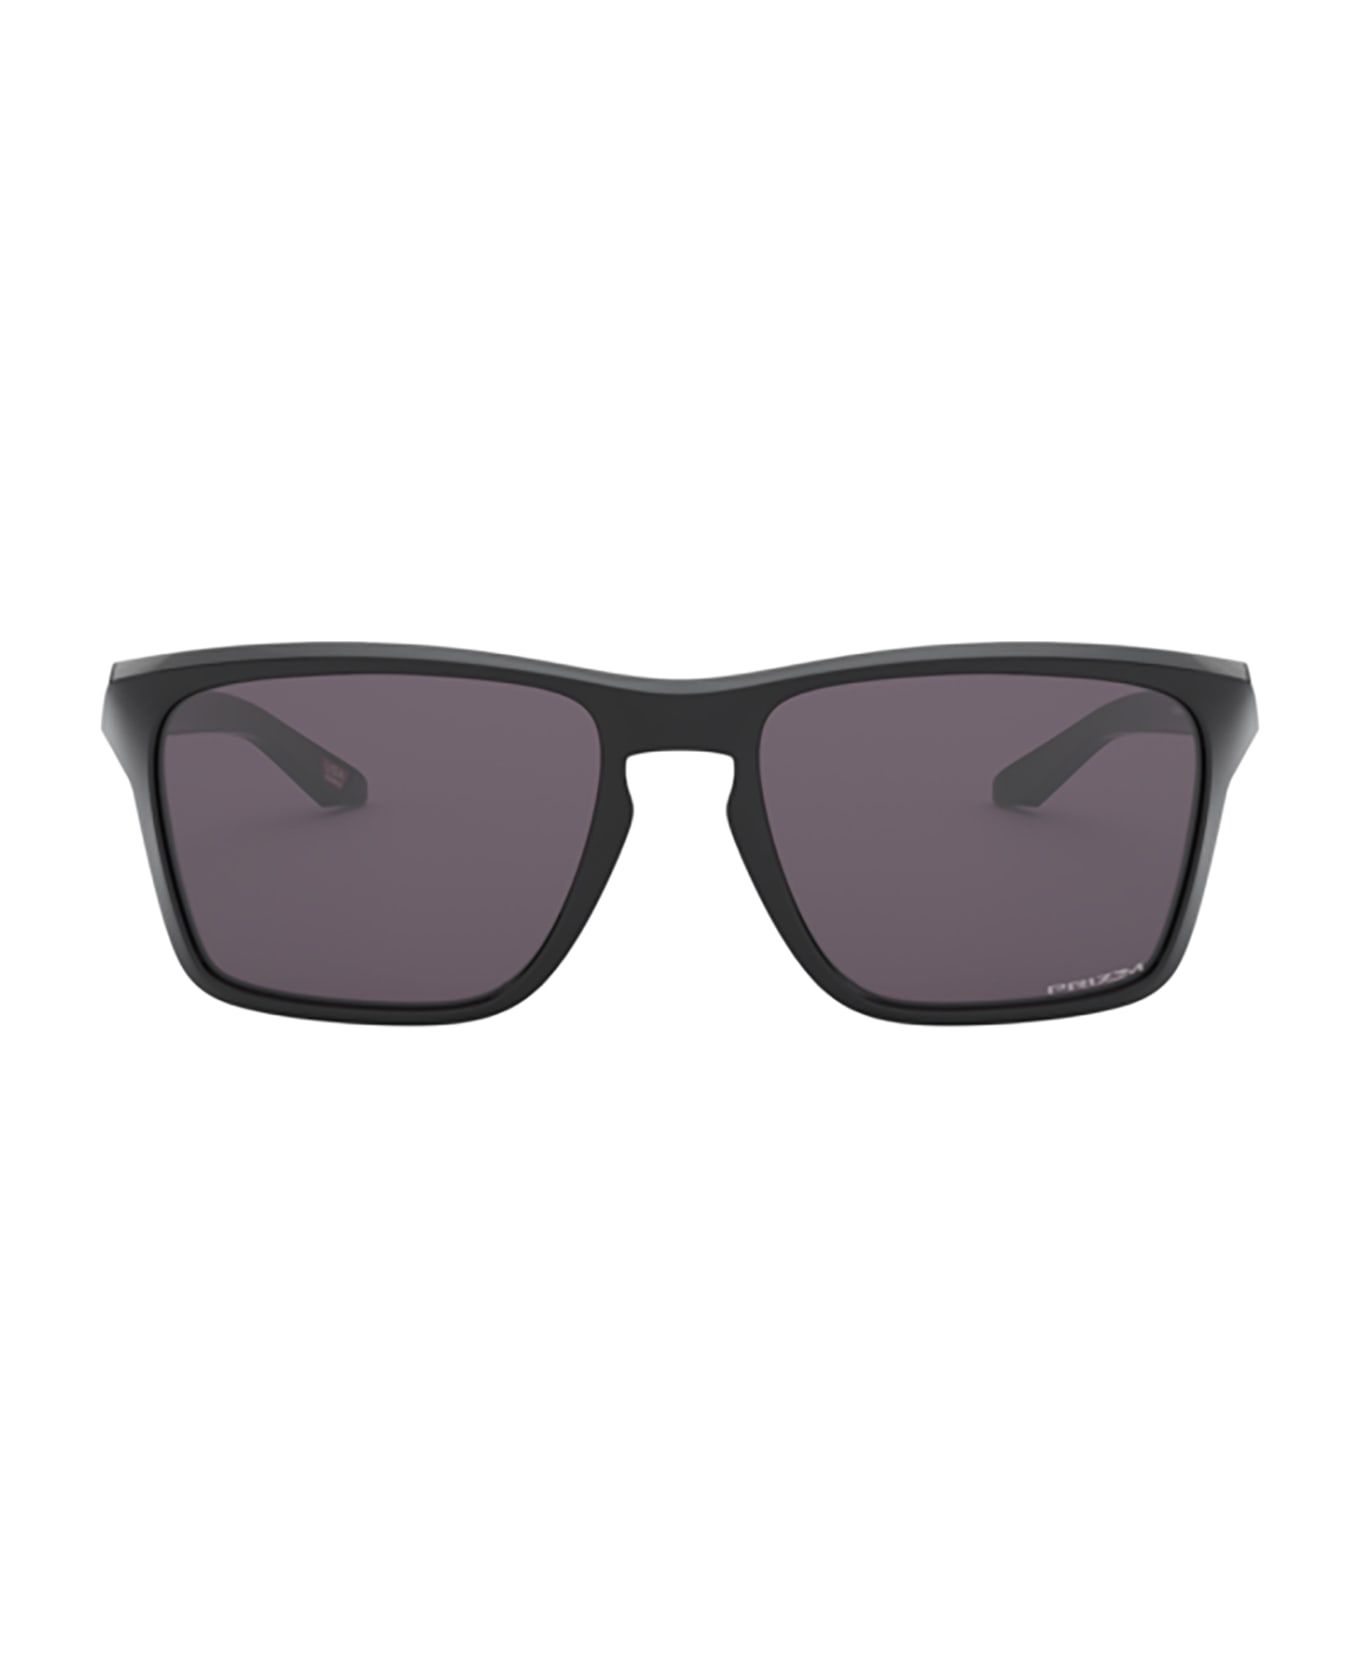 Oakley Oo9448 Polished Black Sunglasses - Polished Black サングラス